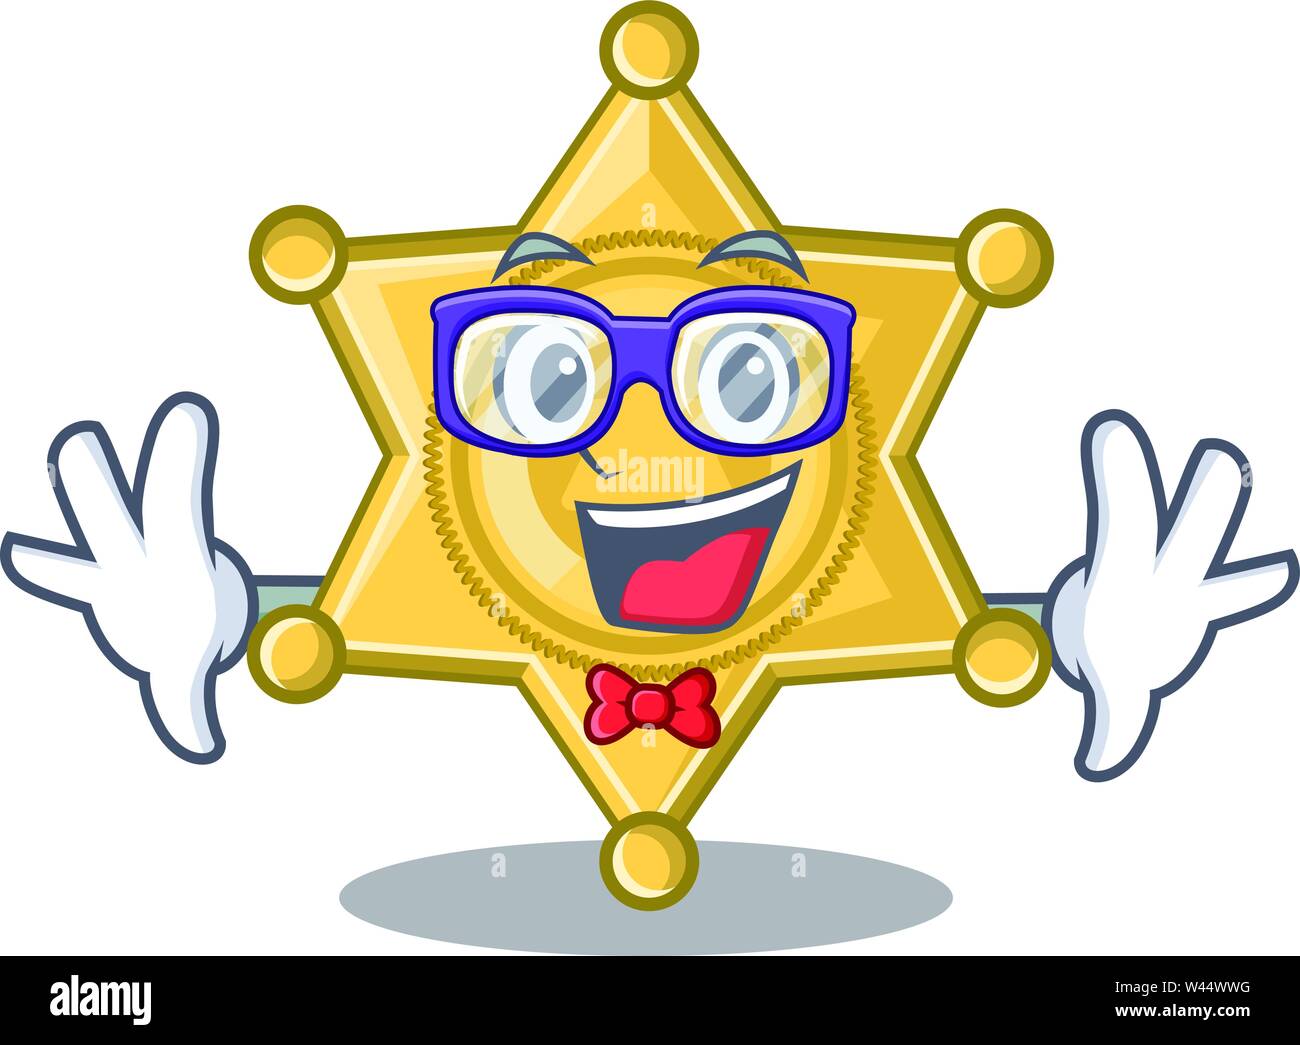 Geek star badge police on a cartoon vector illustration Stock Vector